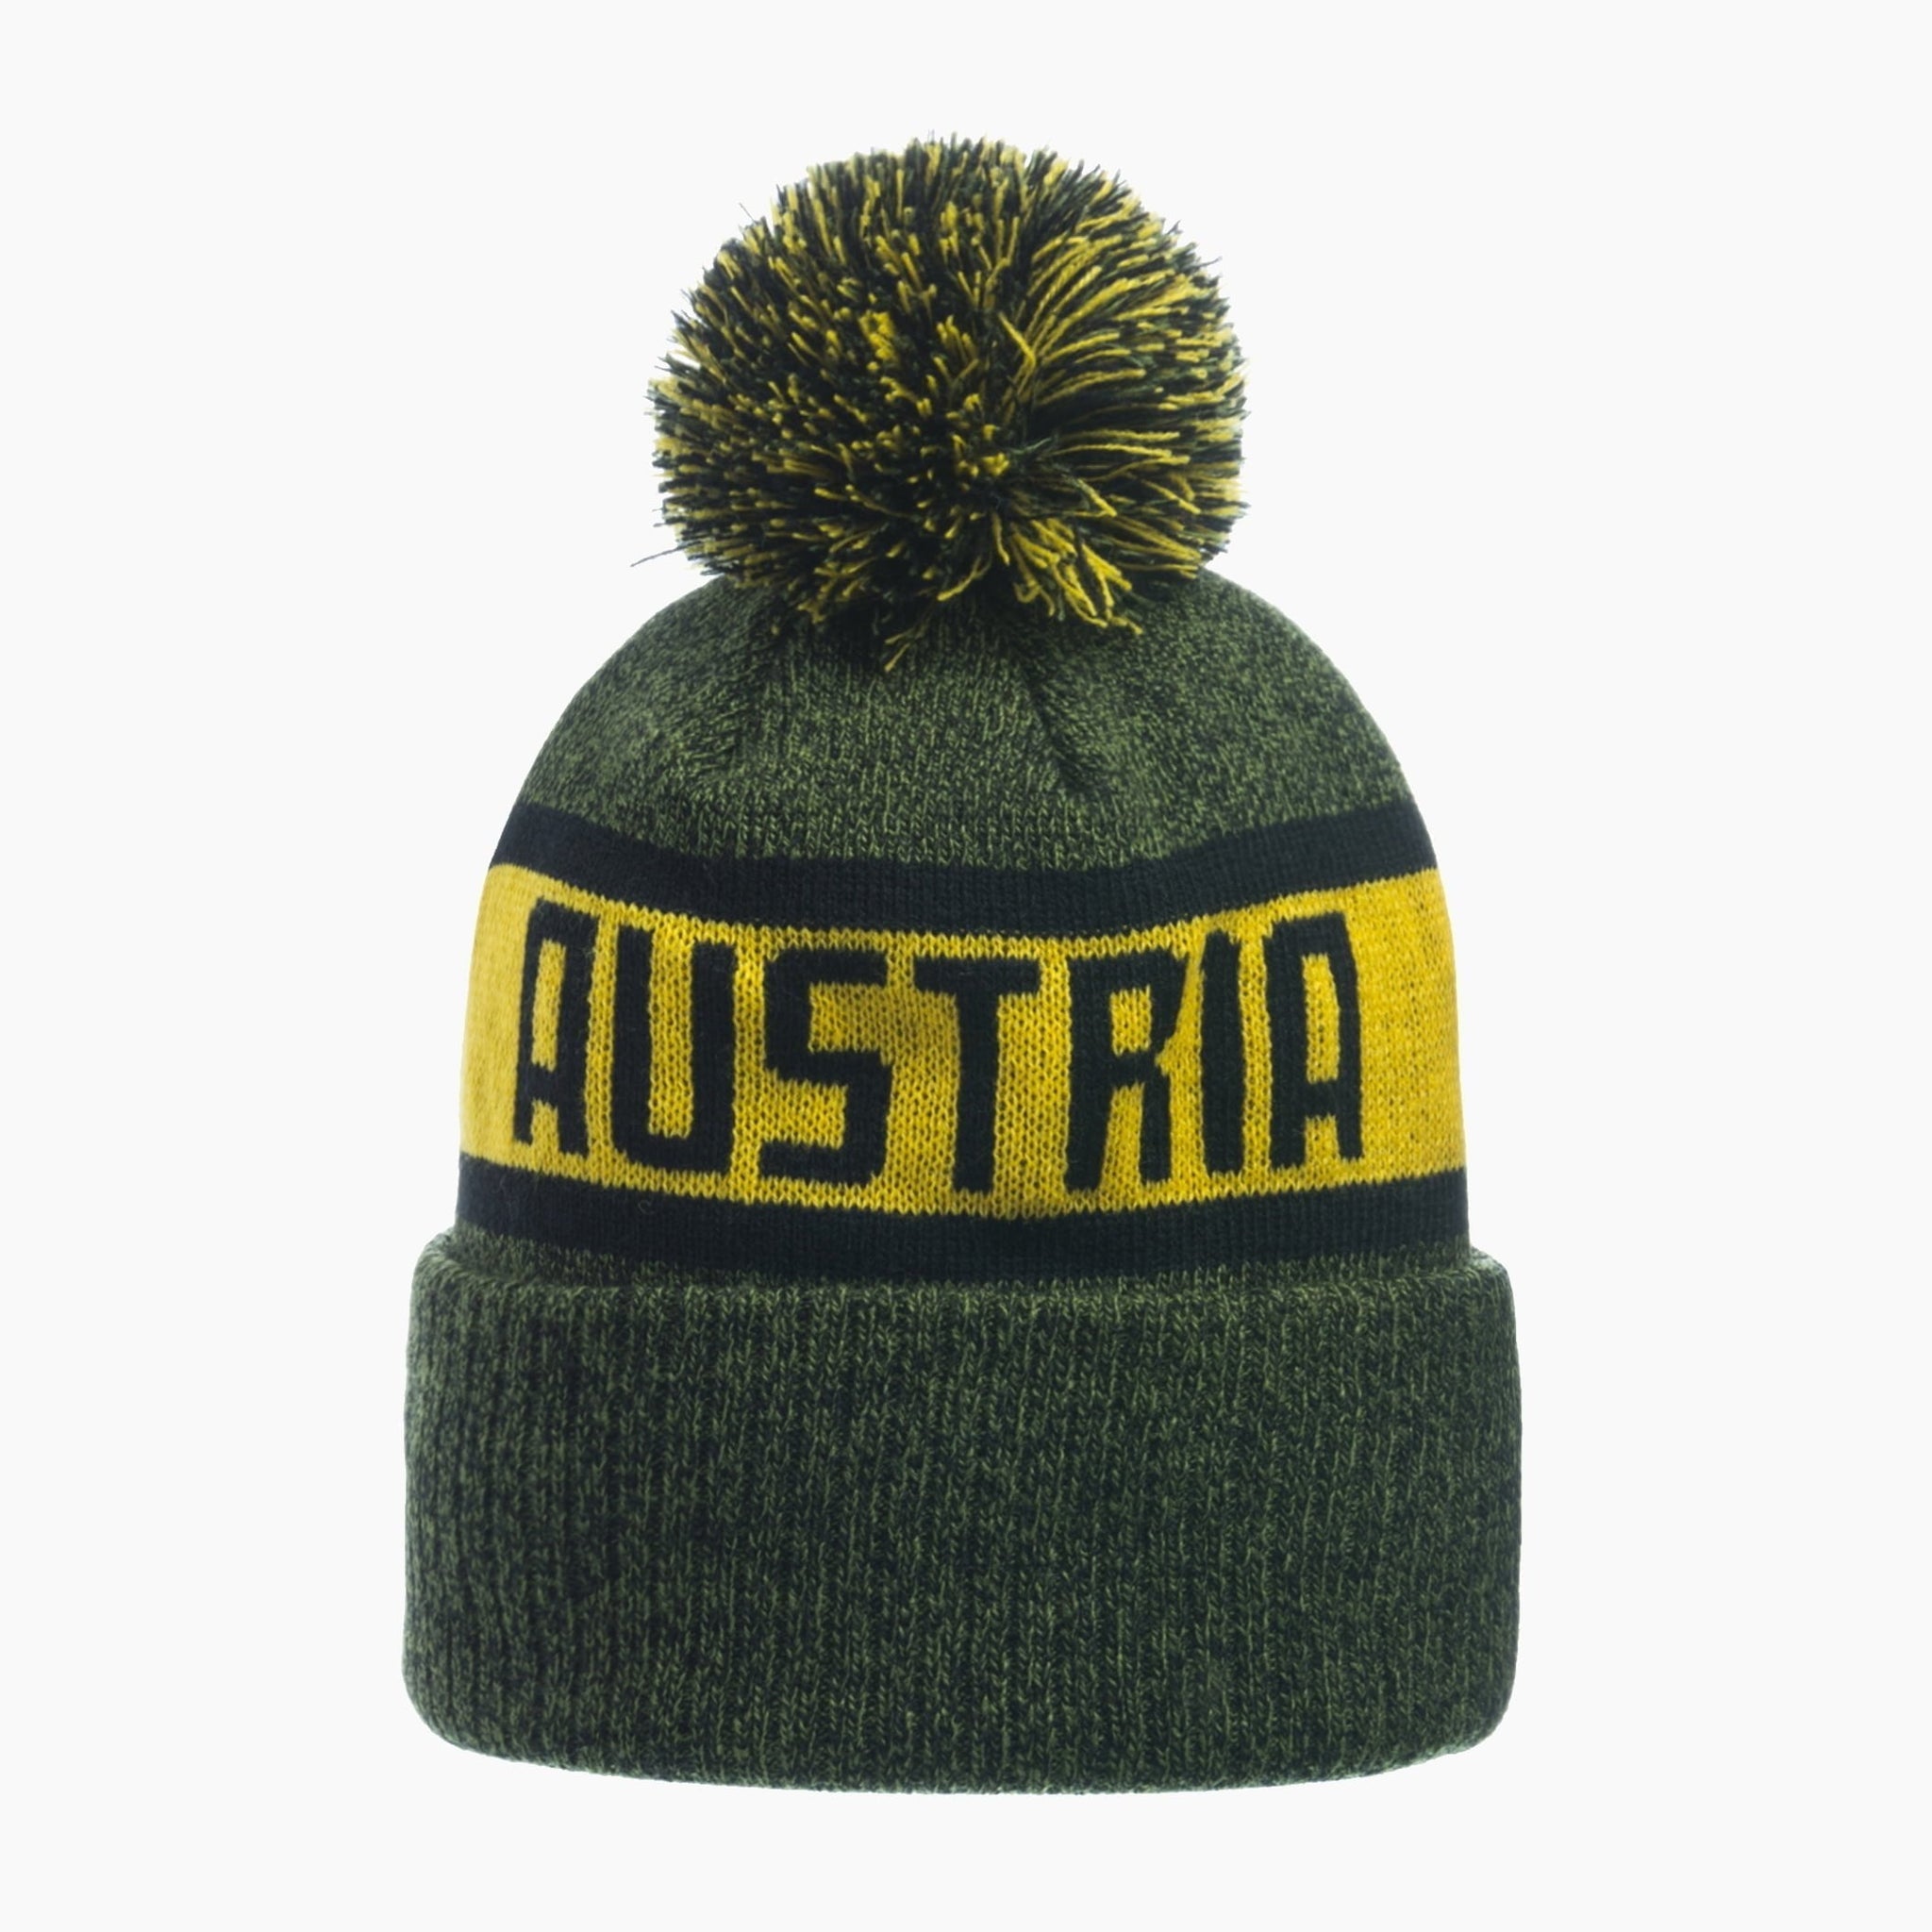 Austria Winter hat - Robin Ruth